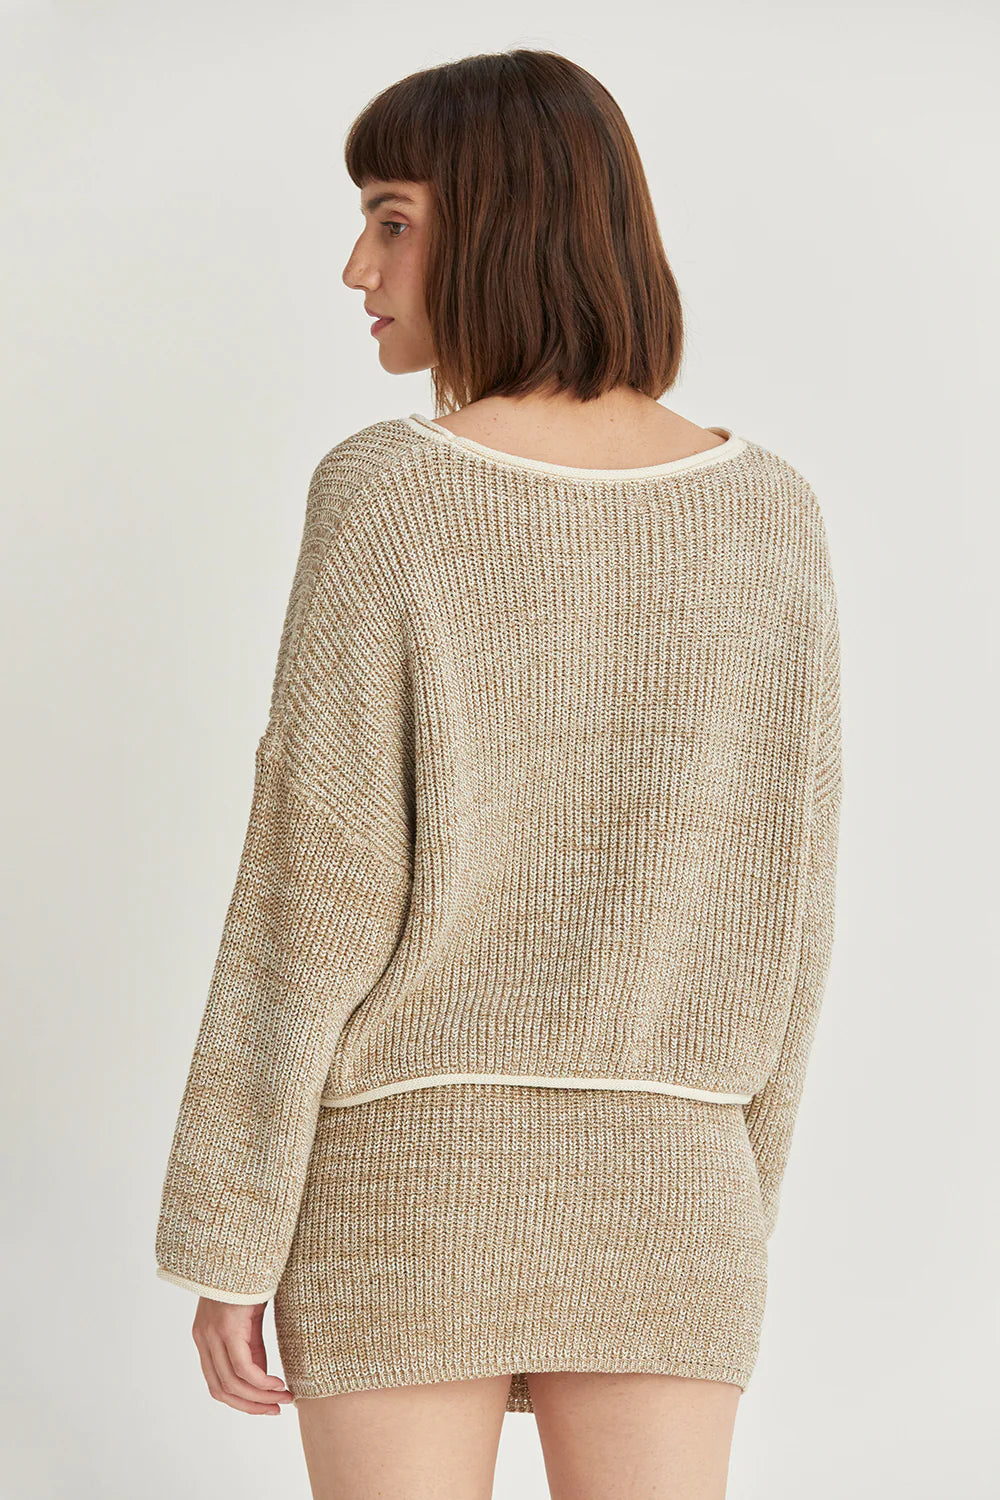 Bailey Sweater Skirt - FINAL SALE